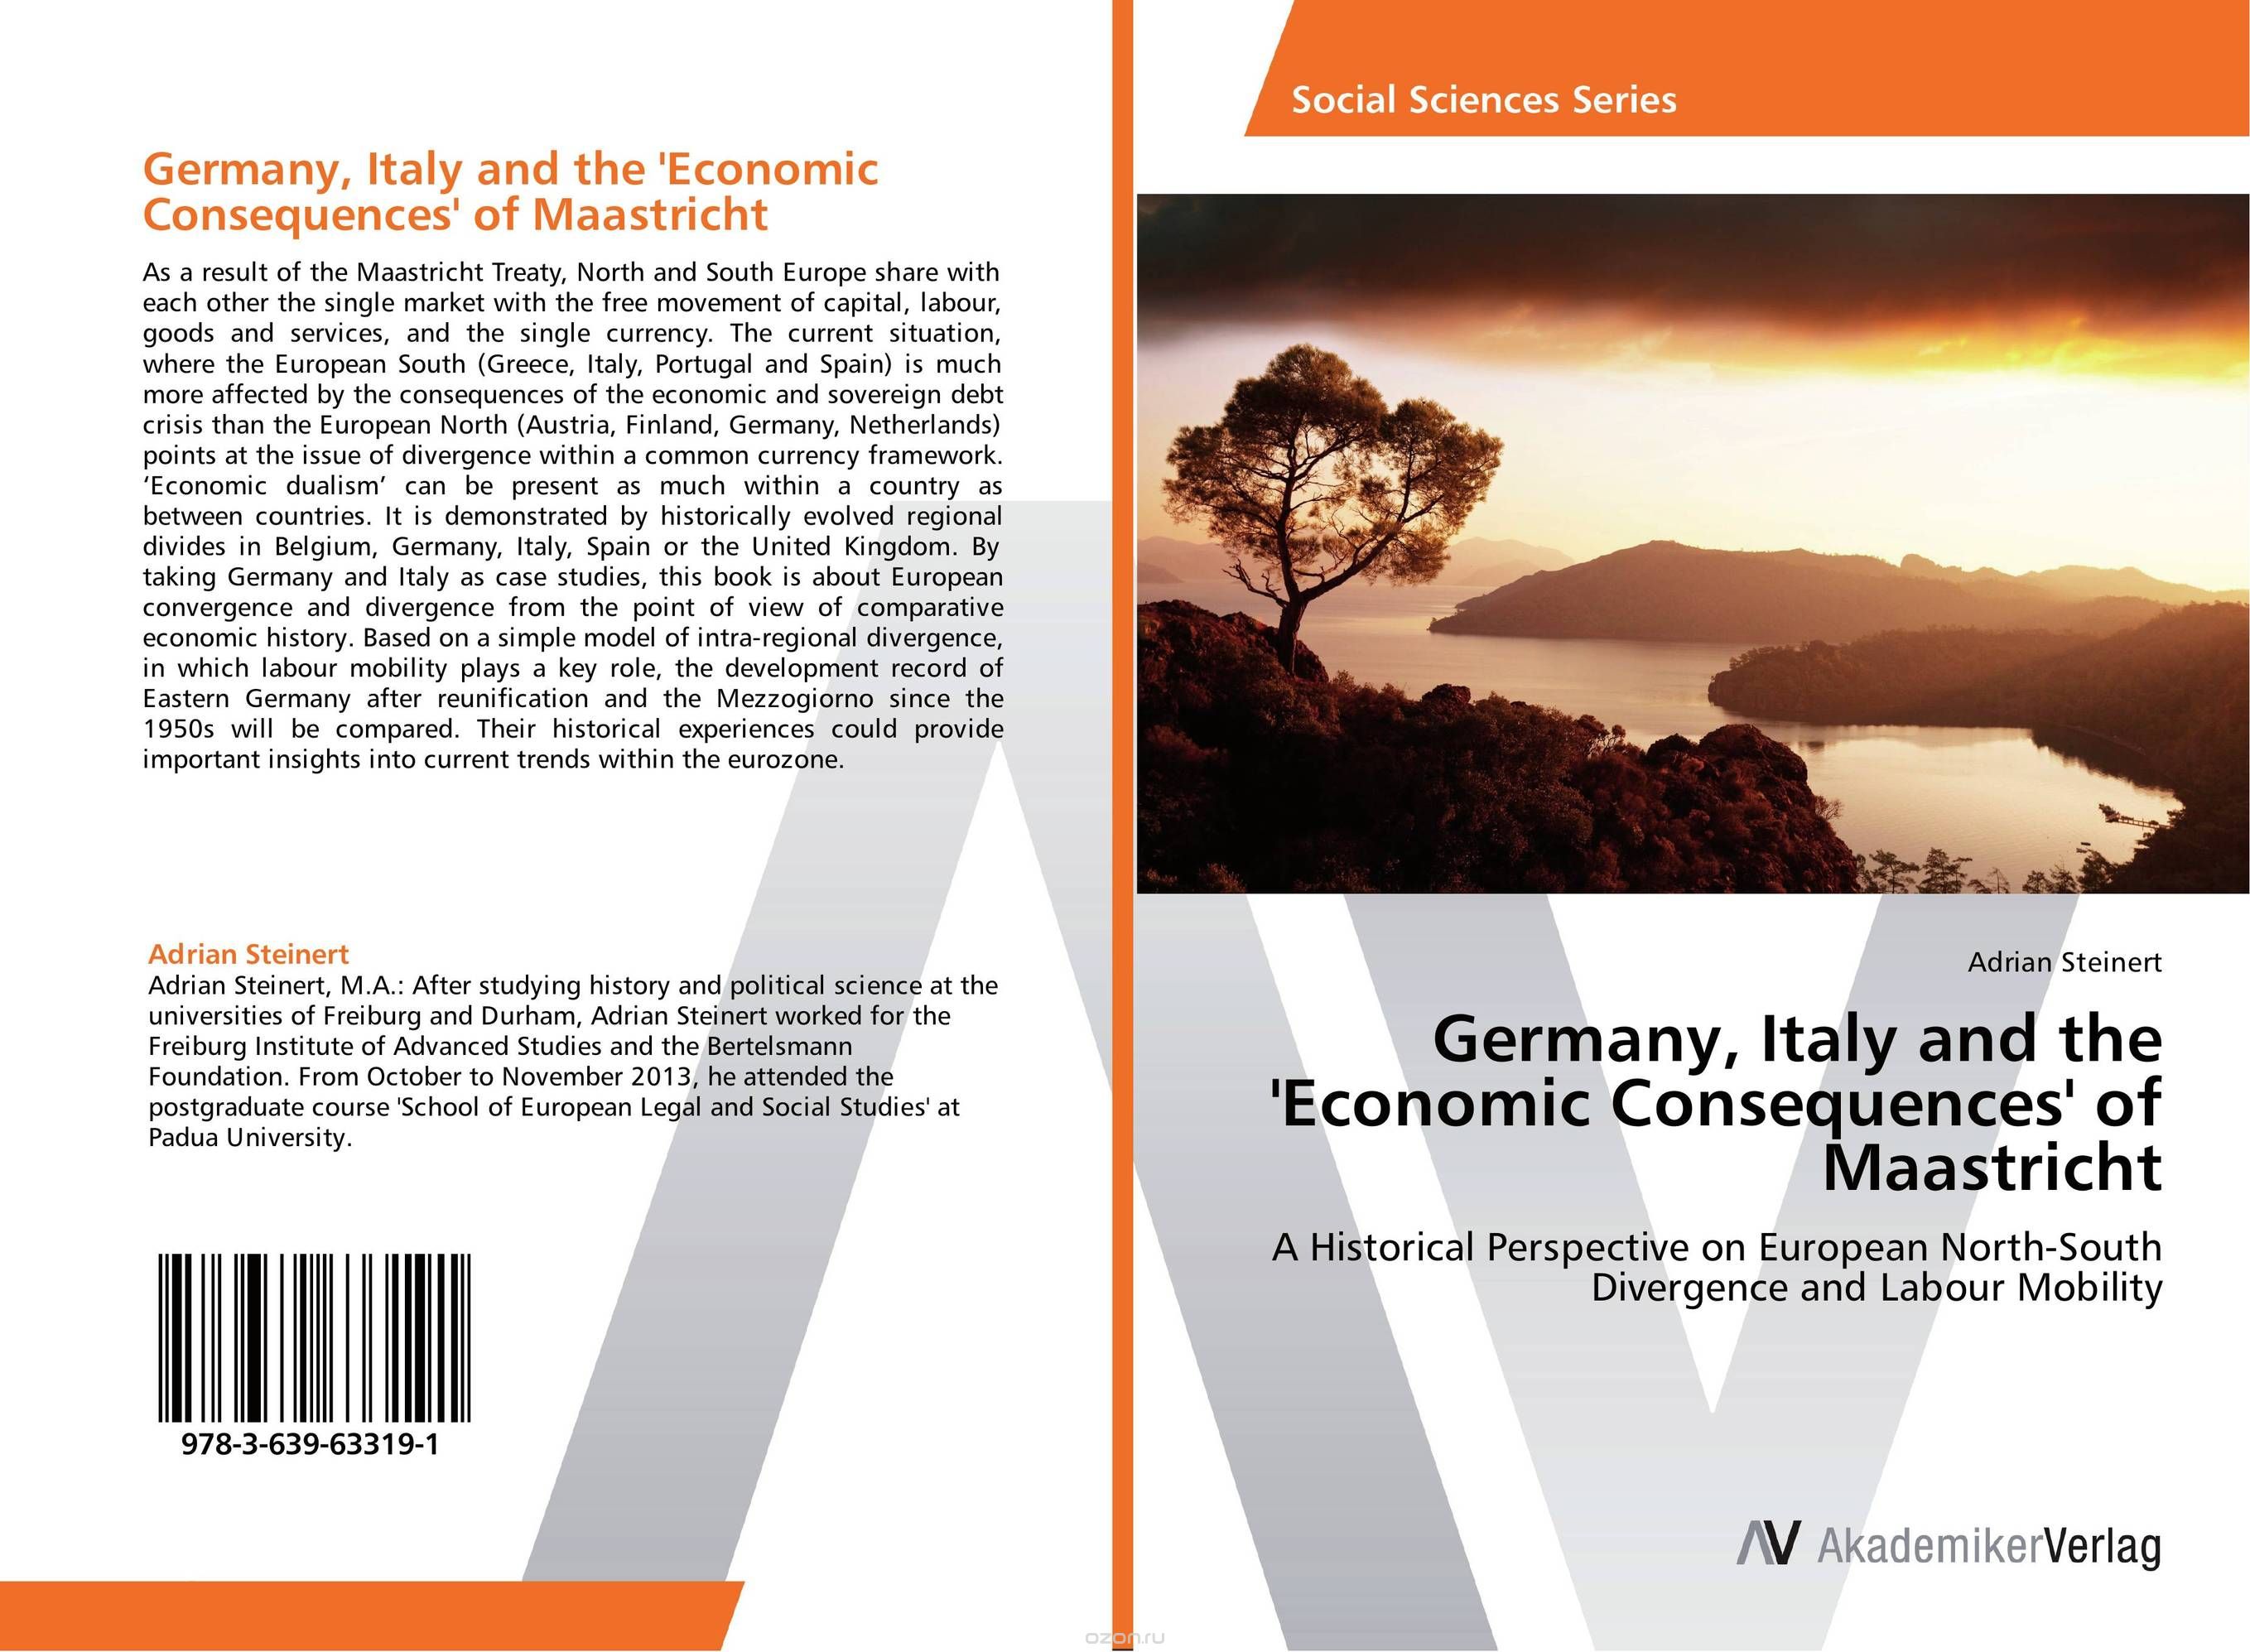 Скачать книгу "Germany, Italy and the 'Economic Consequences' of Maastricht"